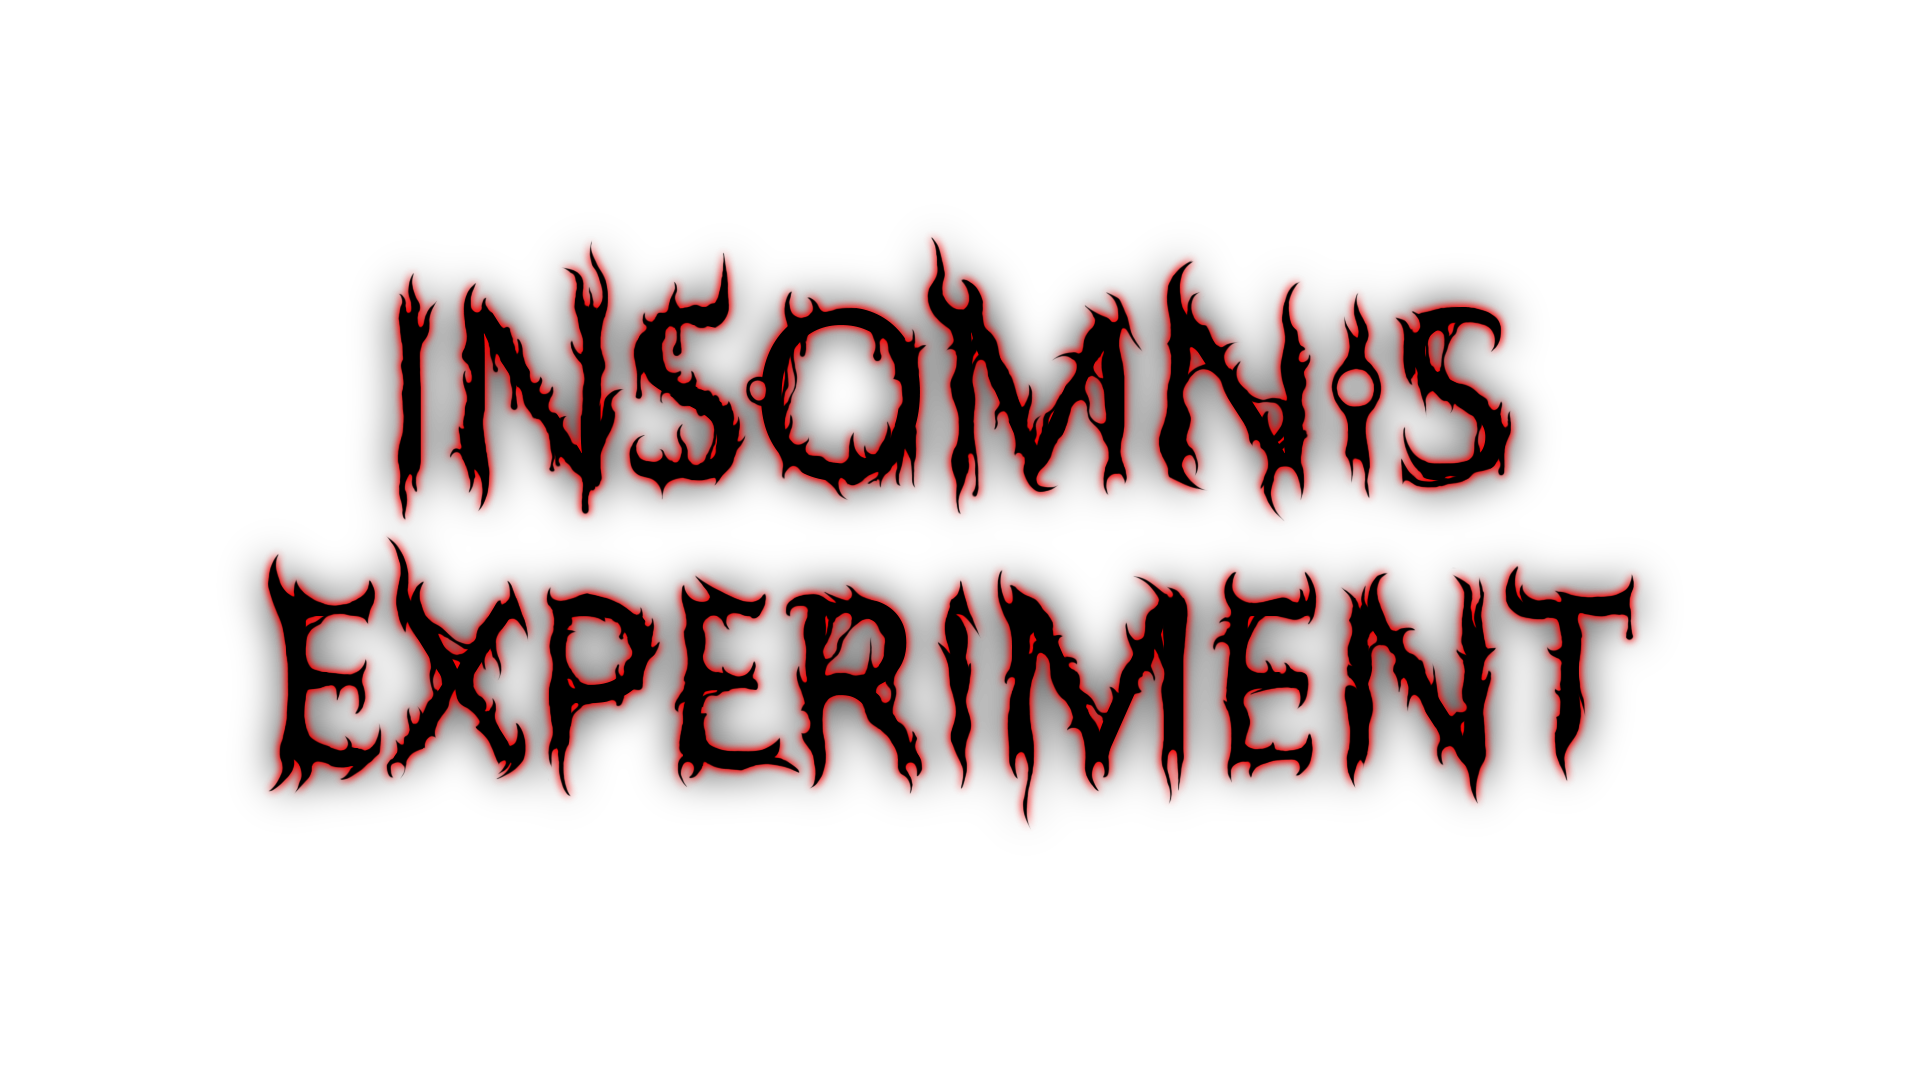 Insomnis Experiment